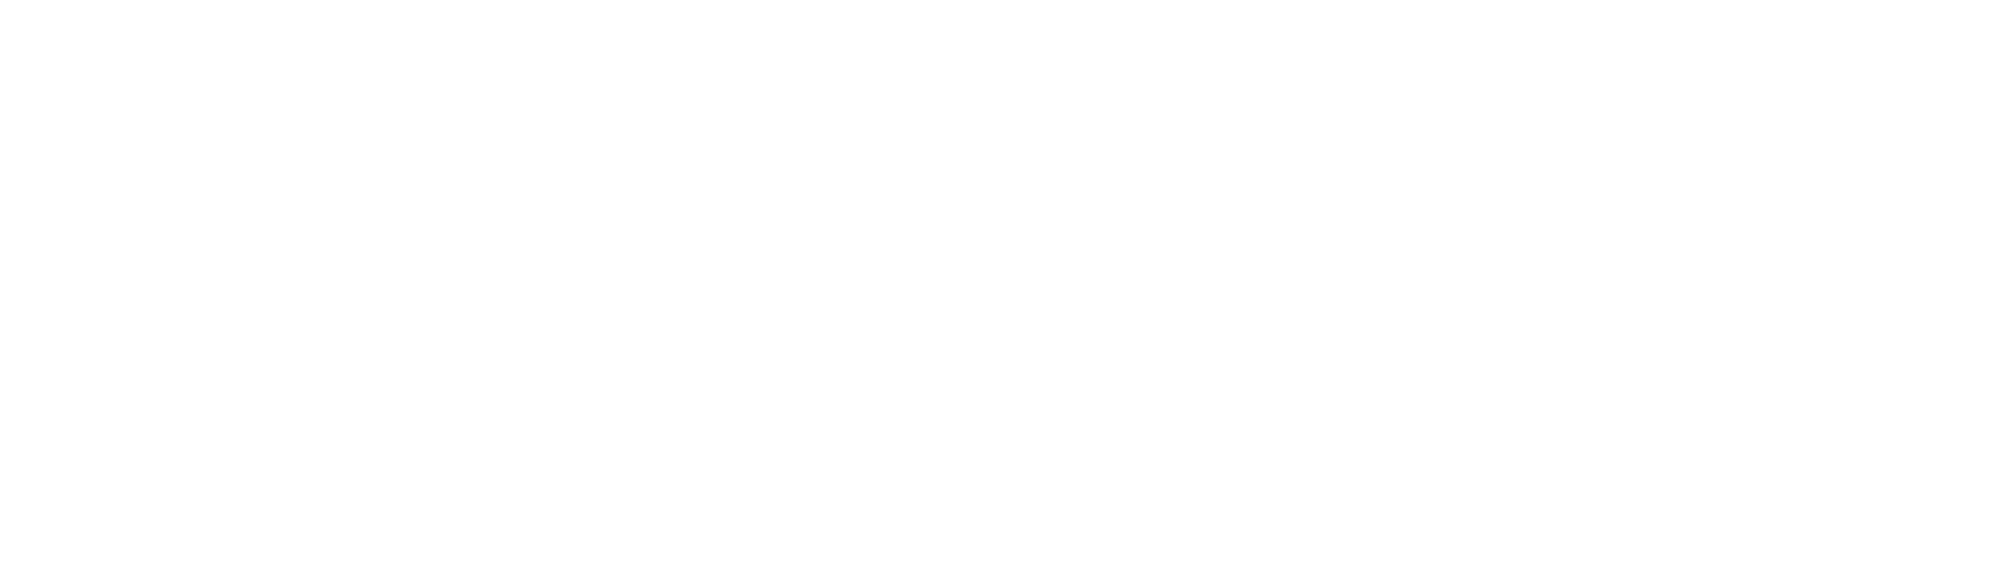 Jonas Eneskär - Cinematographer